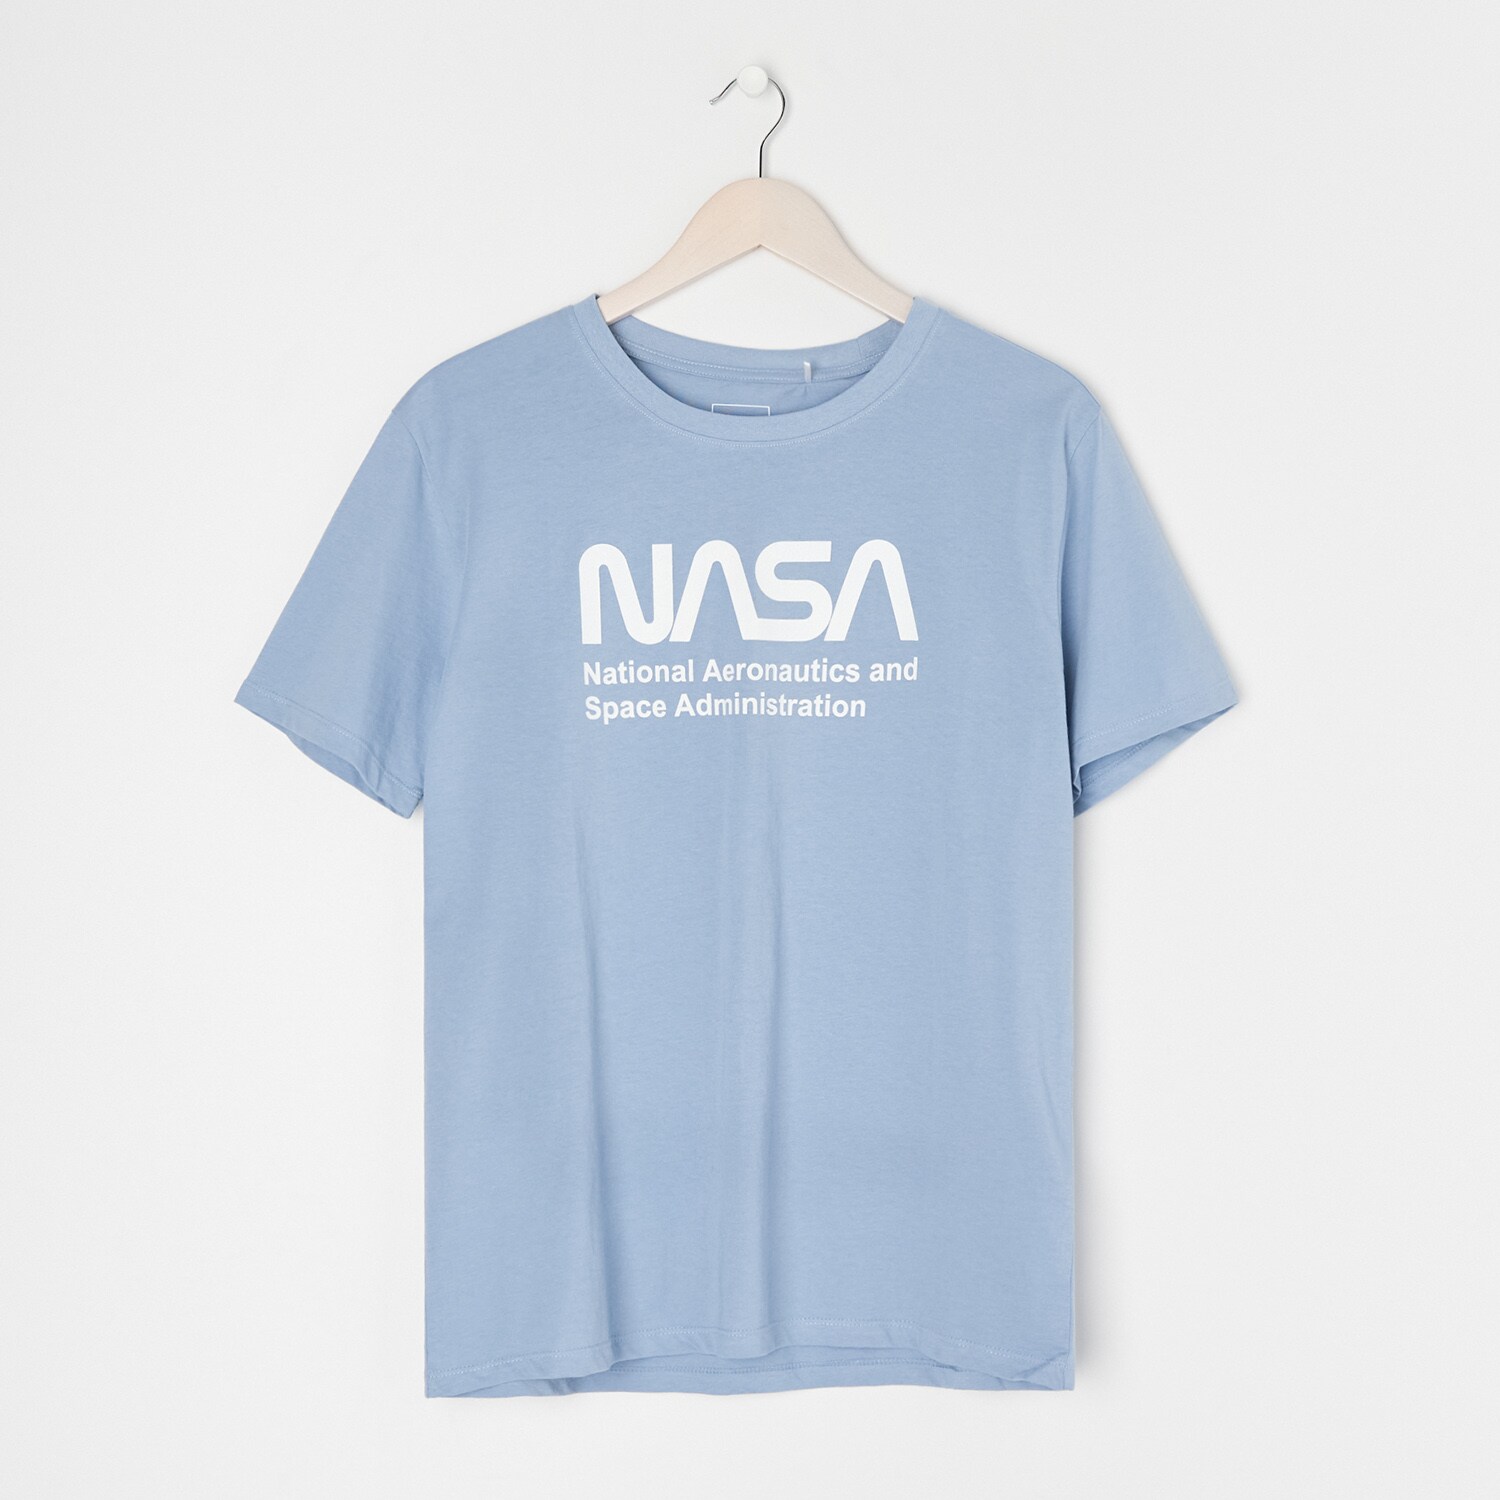 Poze Set pijamale cu NASA - Albastru sinsay.com/ro 